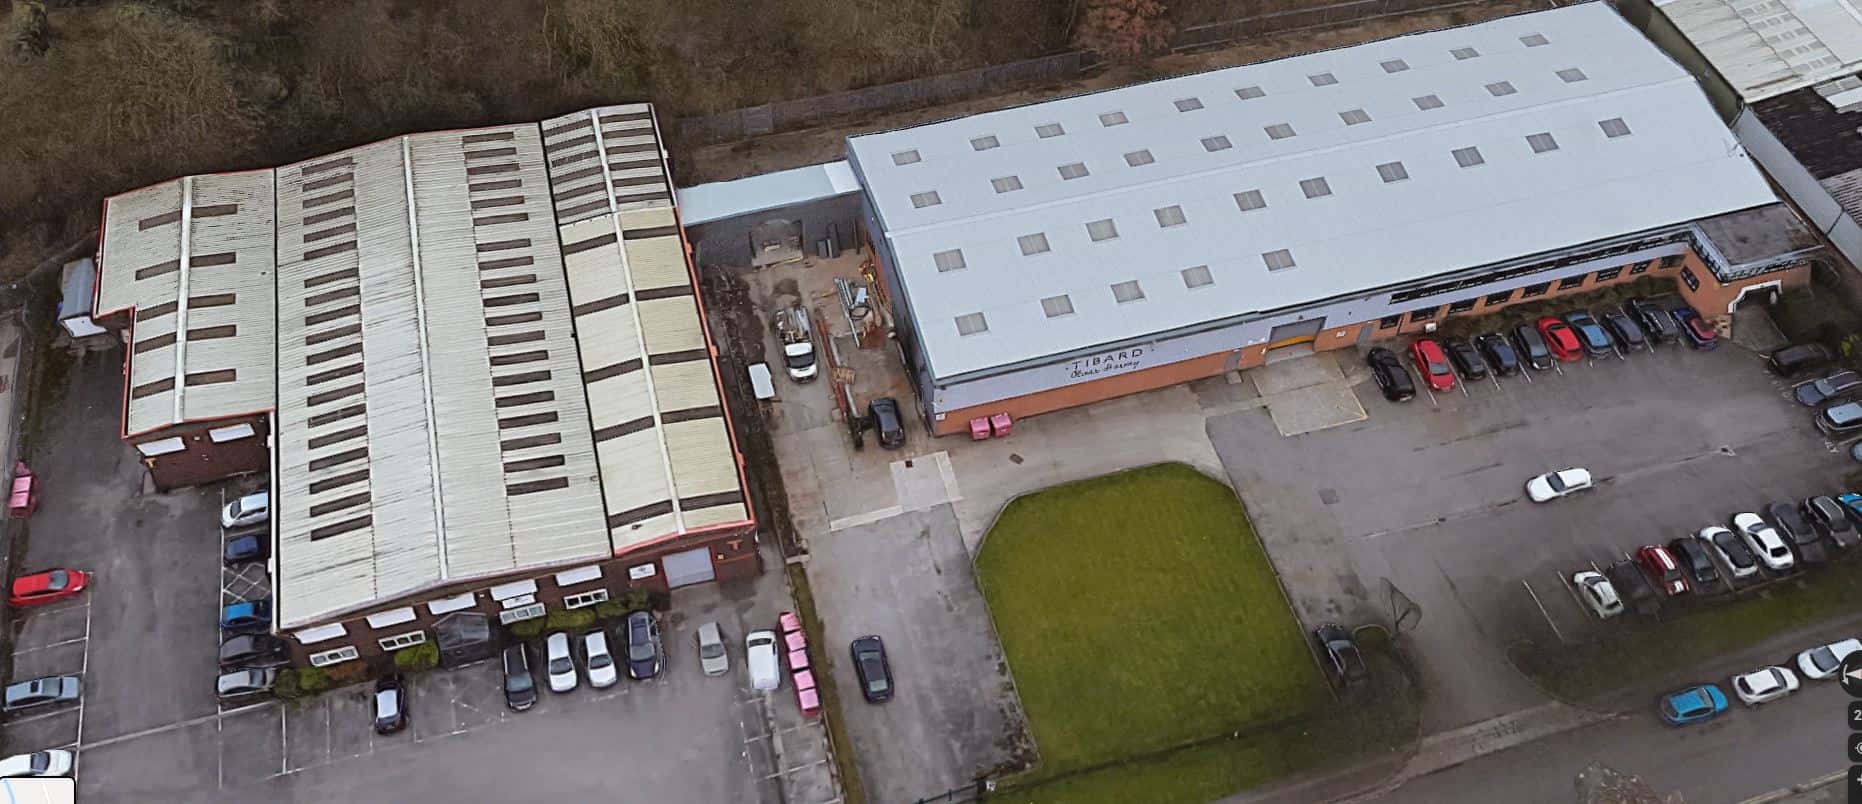 Tibard's British Manufacturing Facility, Dukinfield